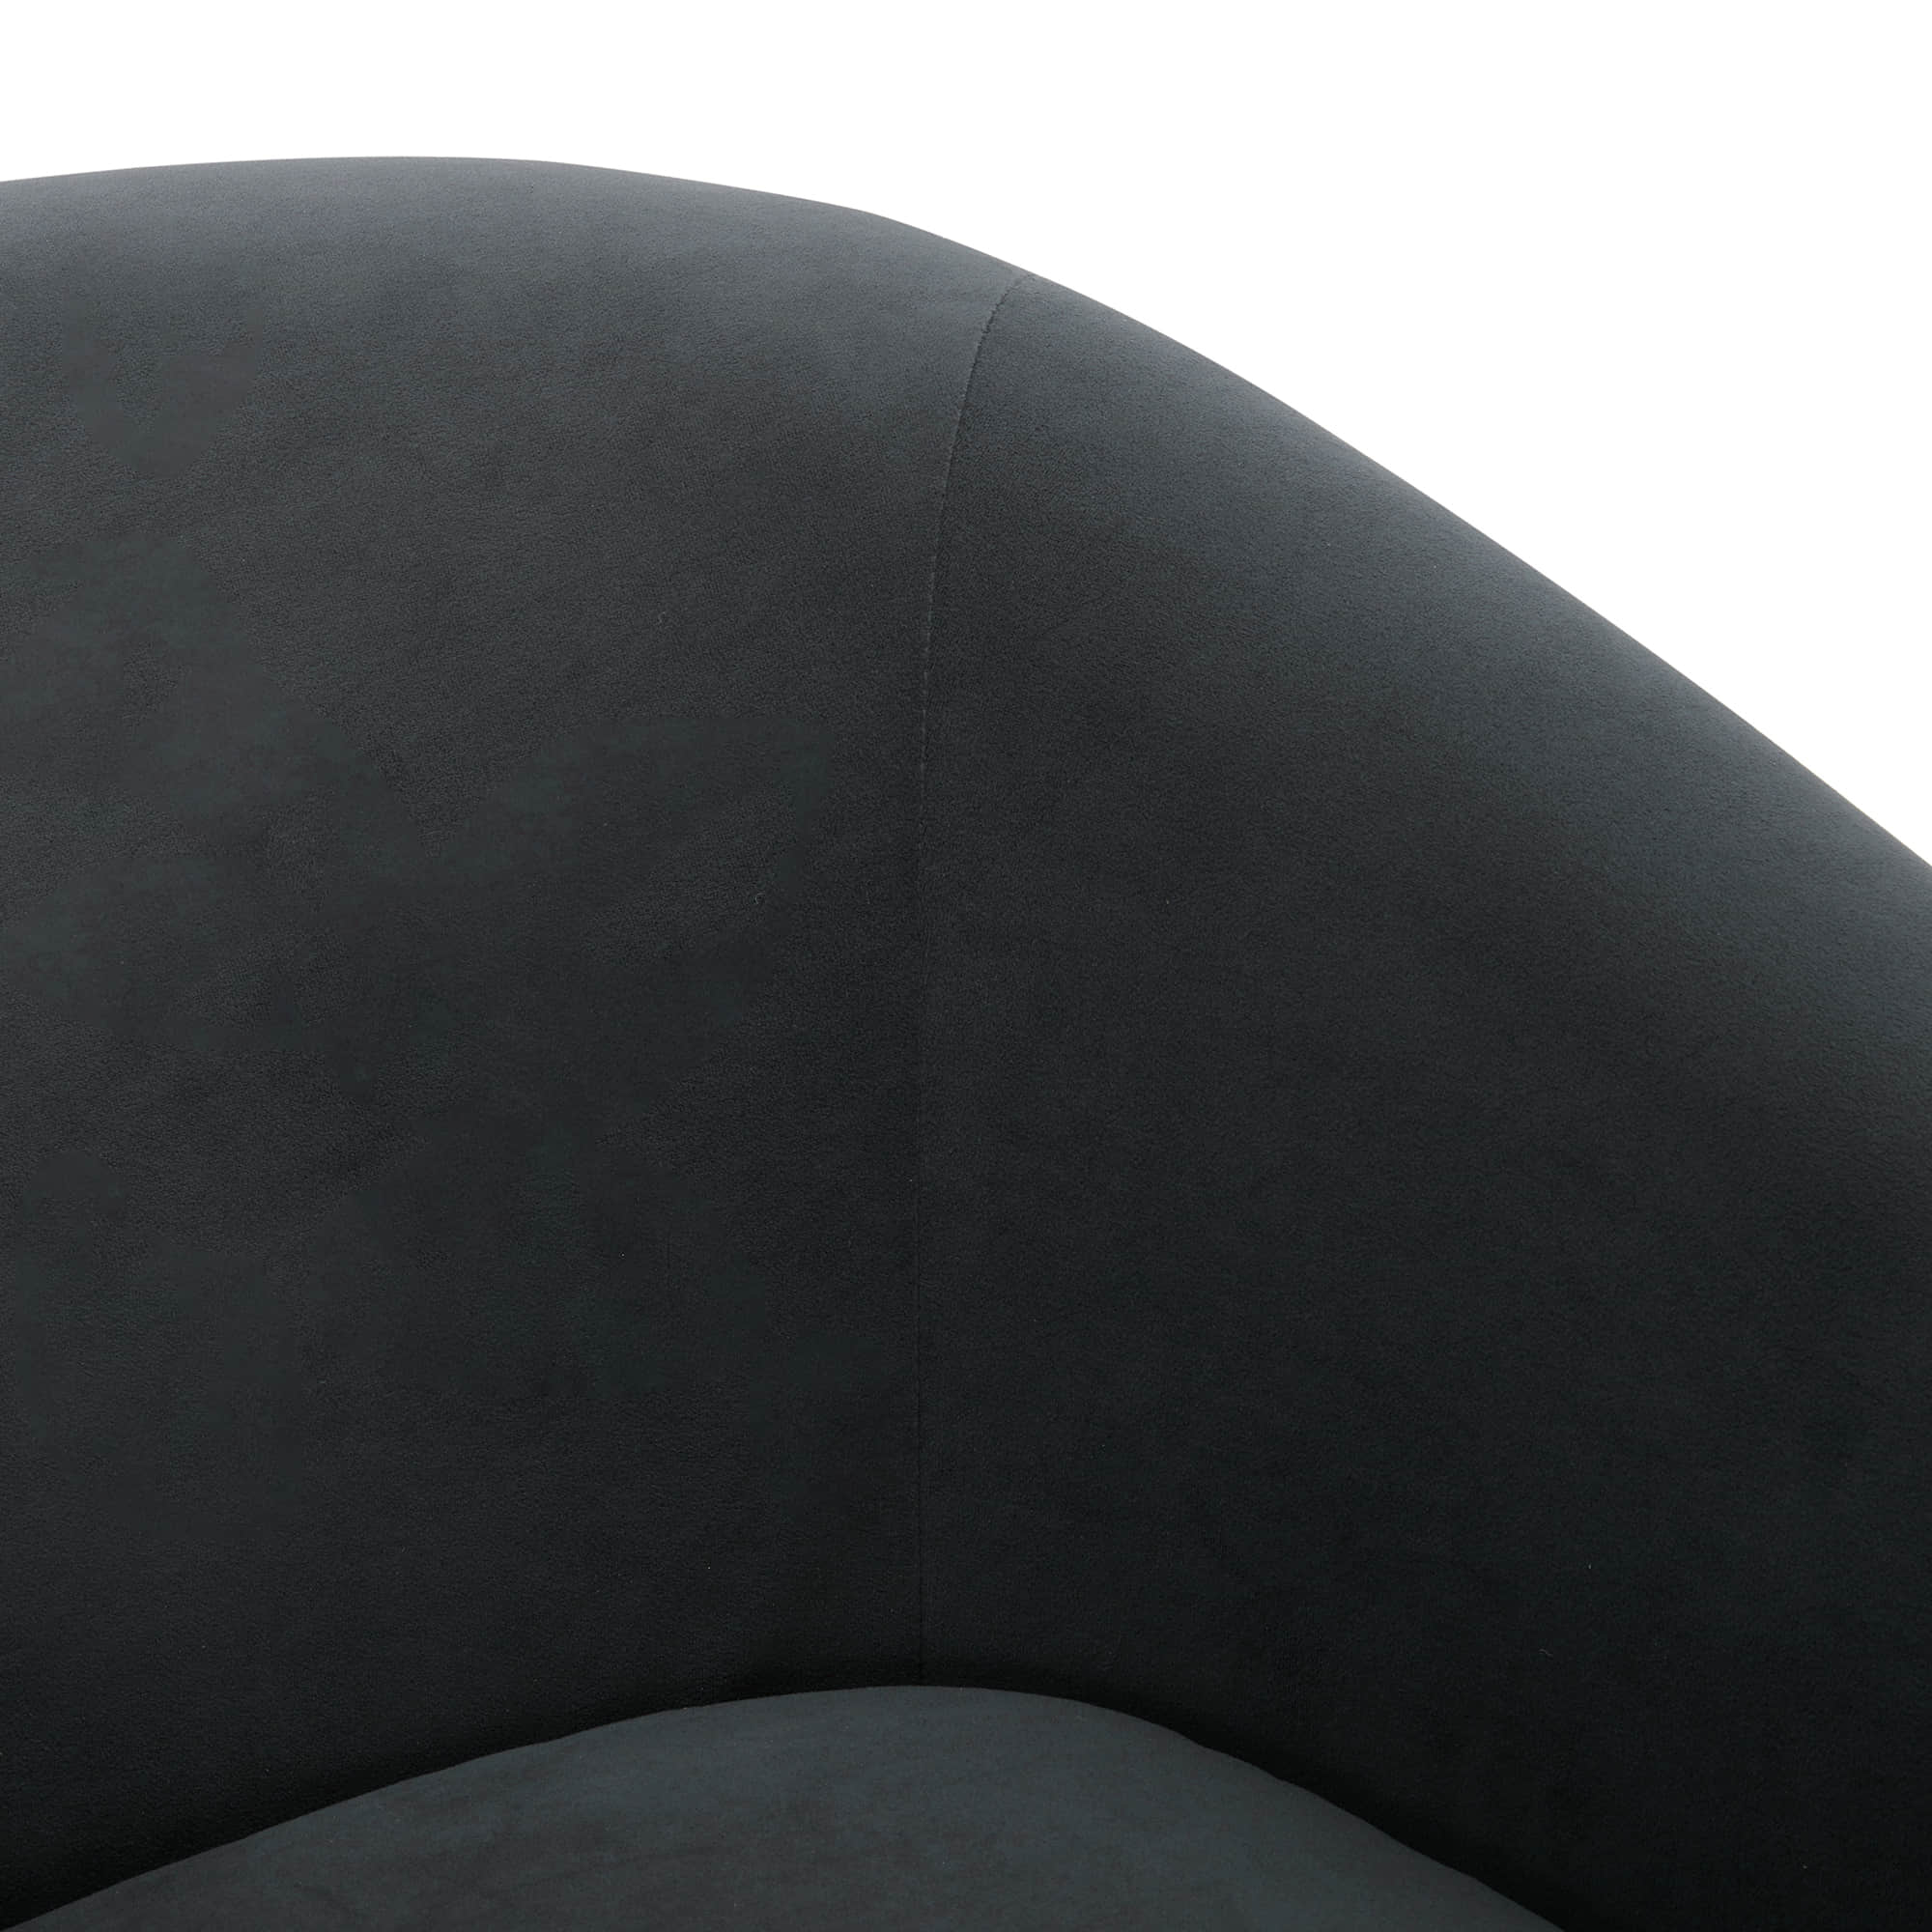 CHITA LIVING-Wren Modern Swivel Accent Chair-Accent Chair-Velvet-Gray-